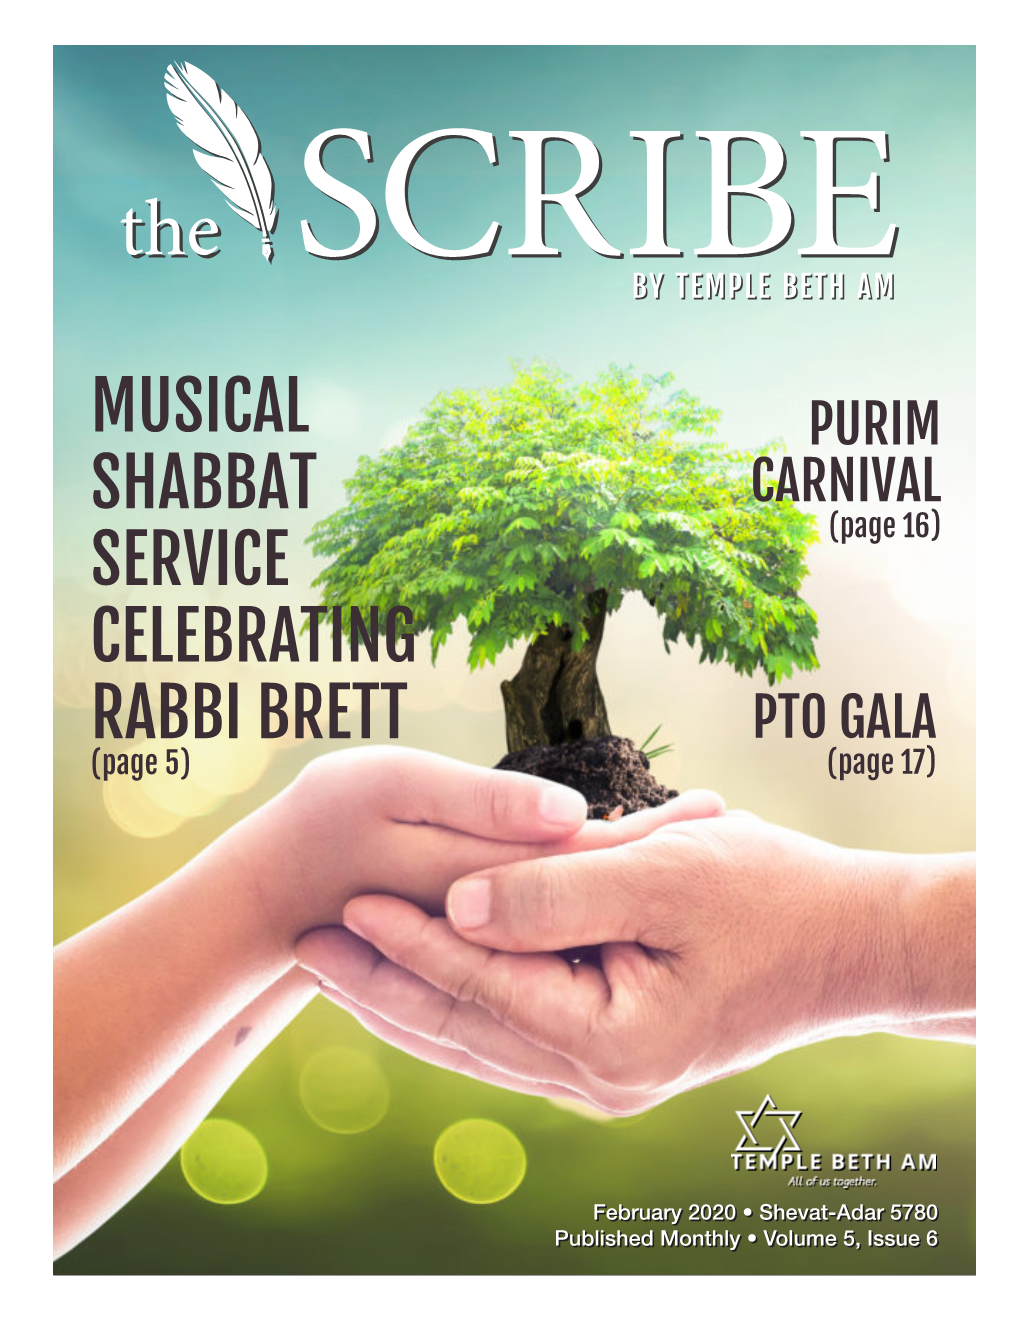 Musical Shabbat Service Celebrating Rabbi Brett